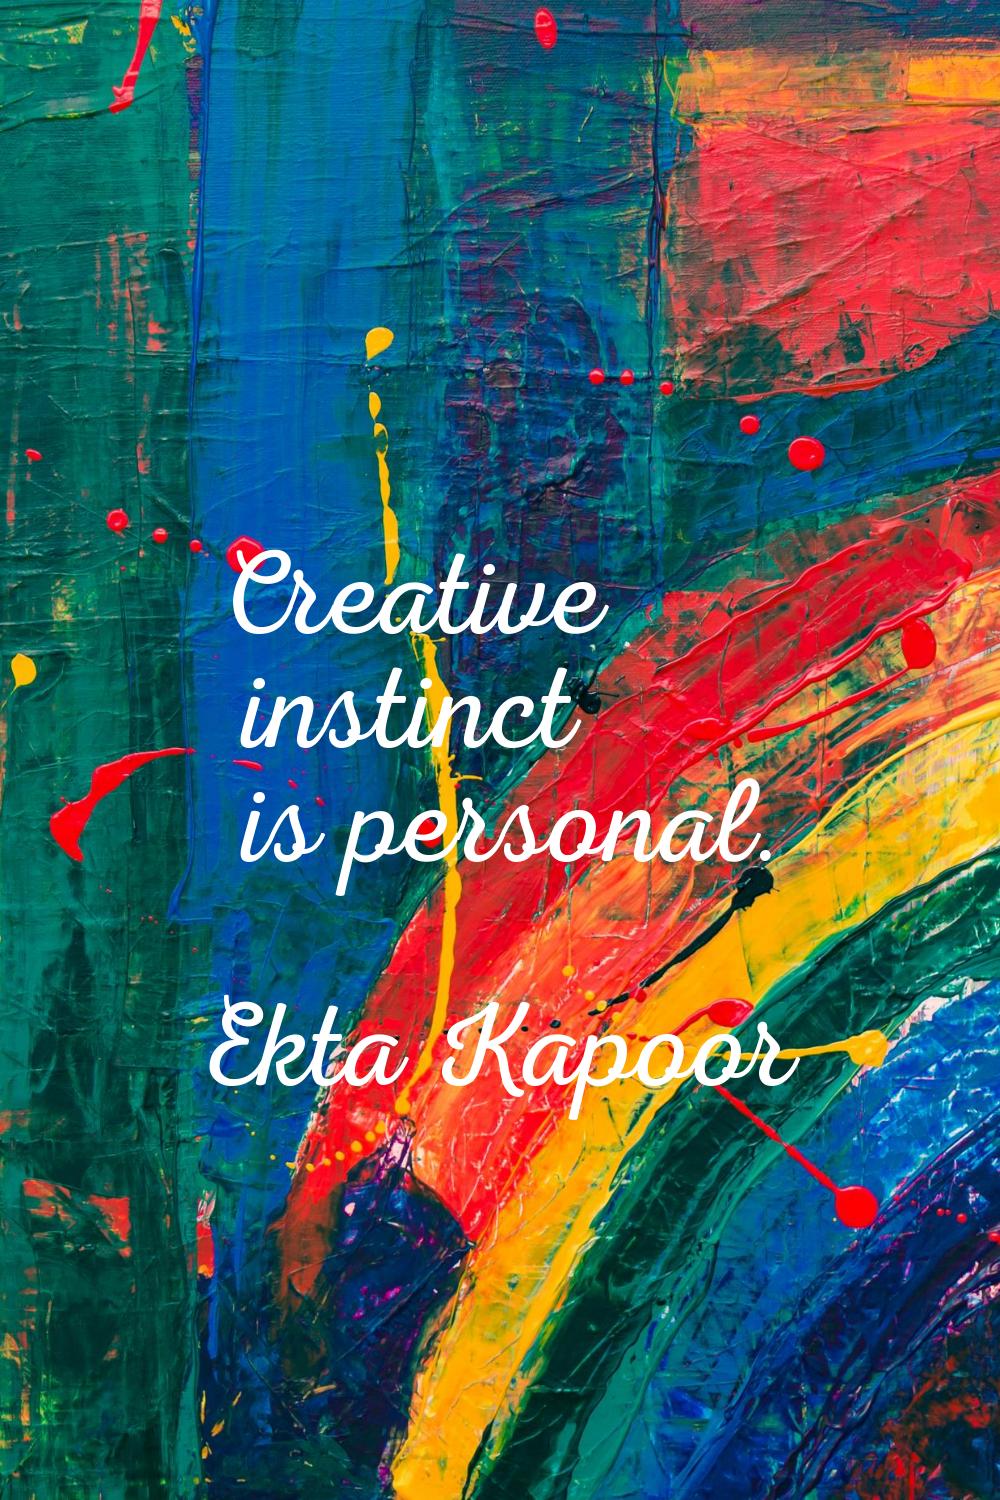 Creative instinct is personal.